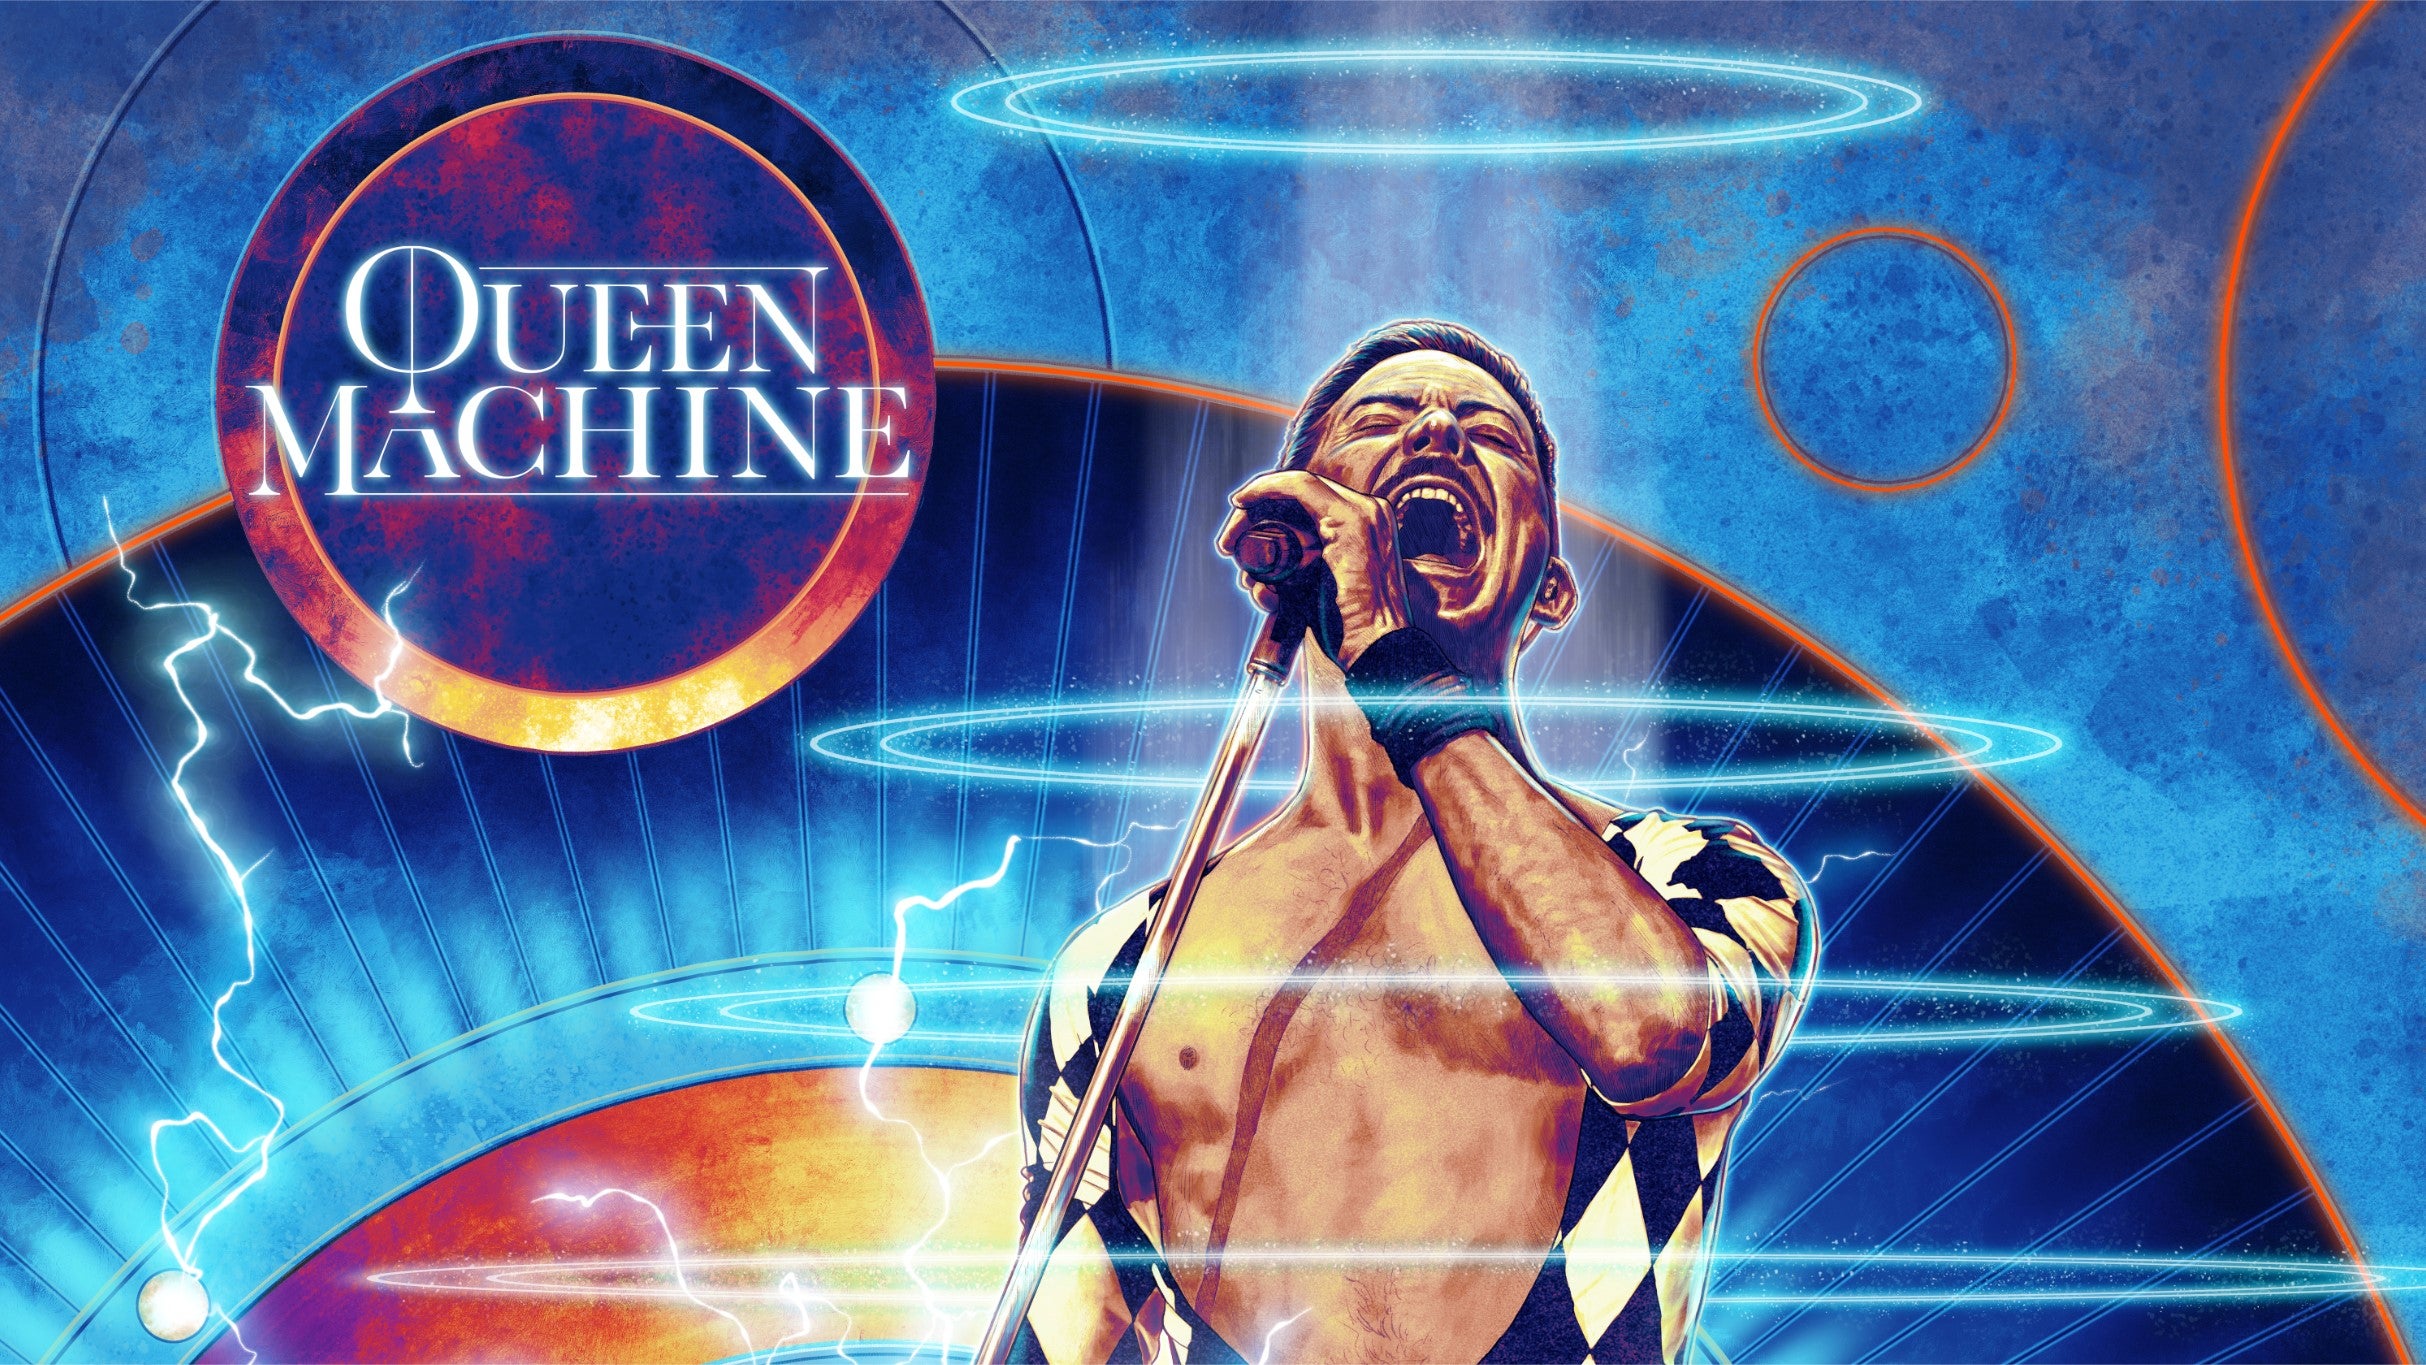 Queen Machine in Waukegan promo photo for Genesee Theatre internet presale offer code